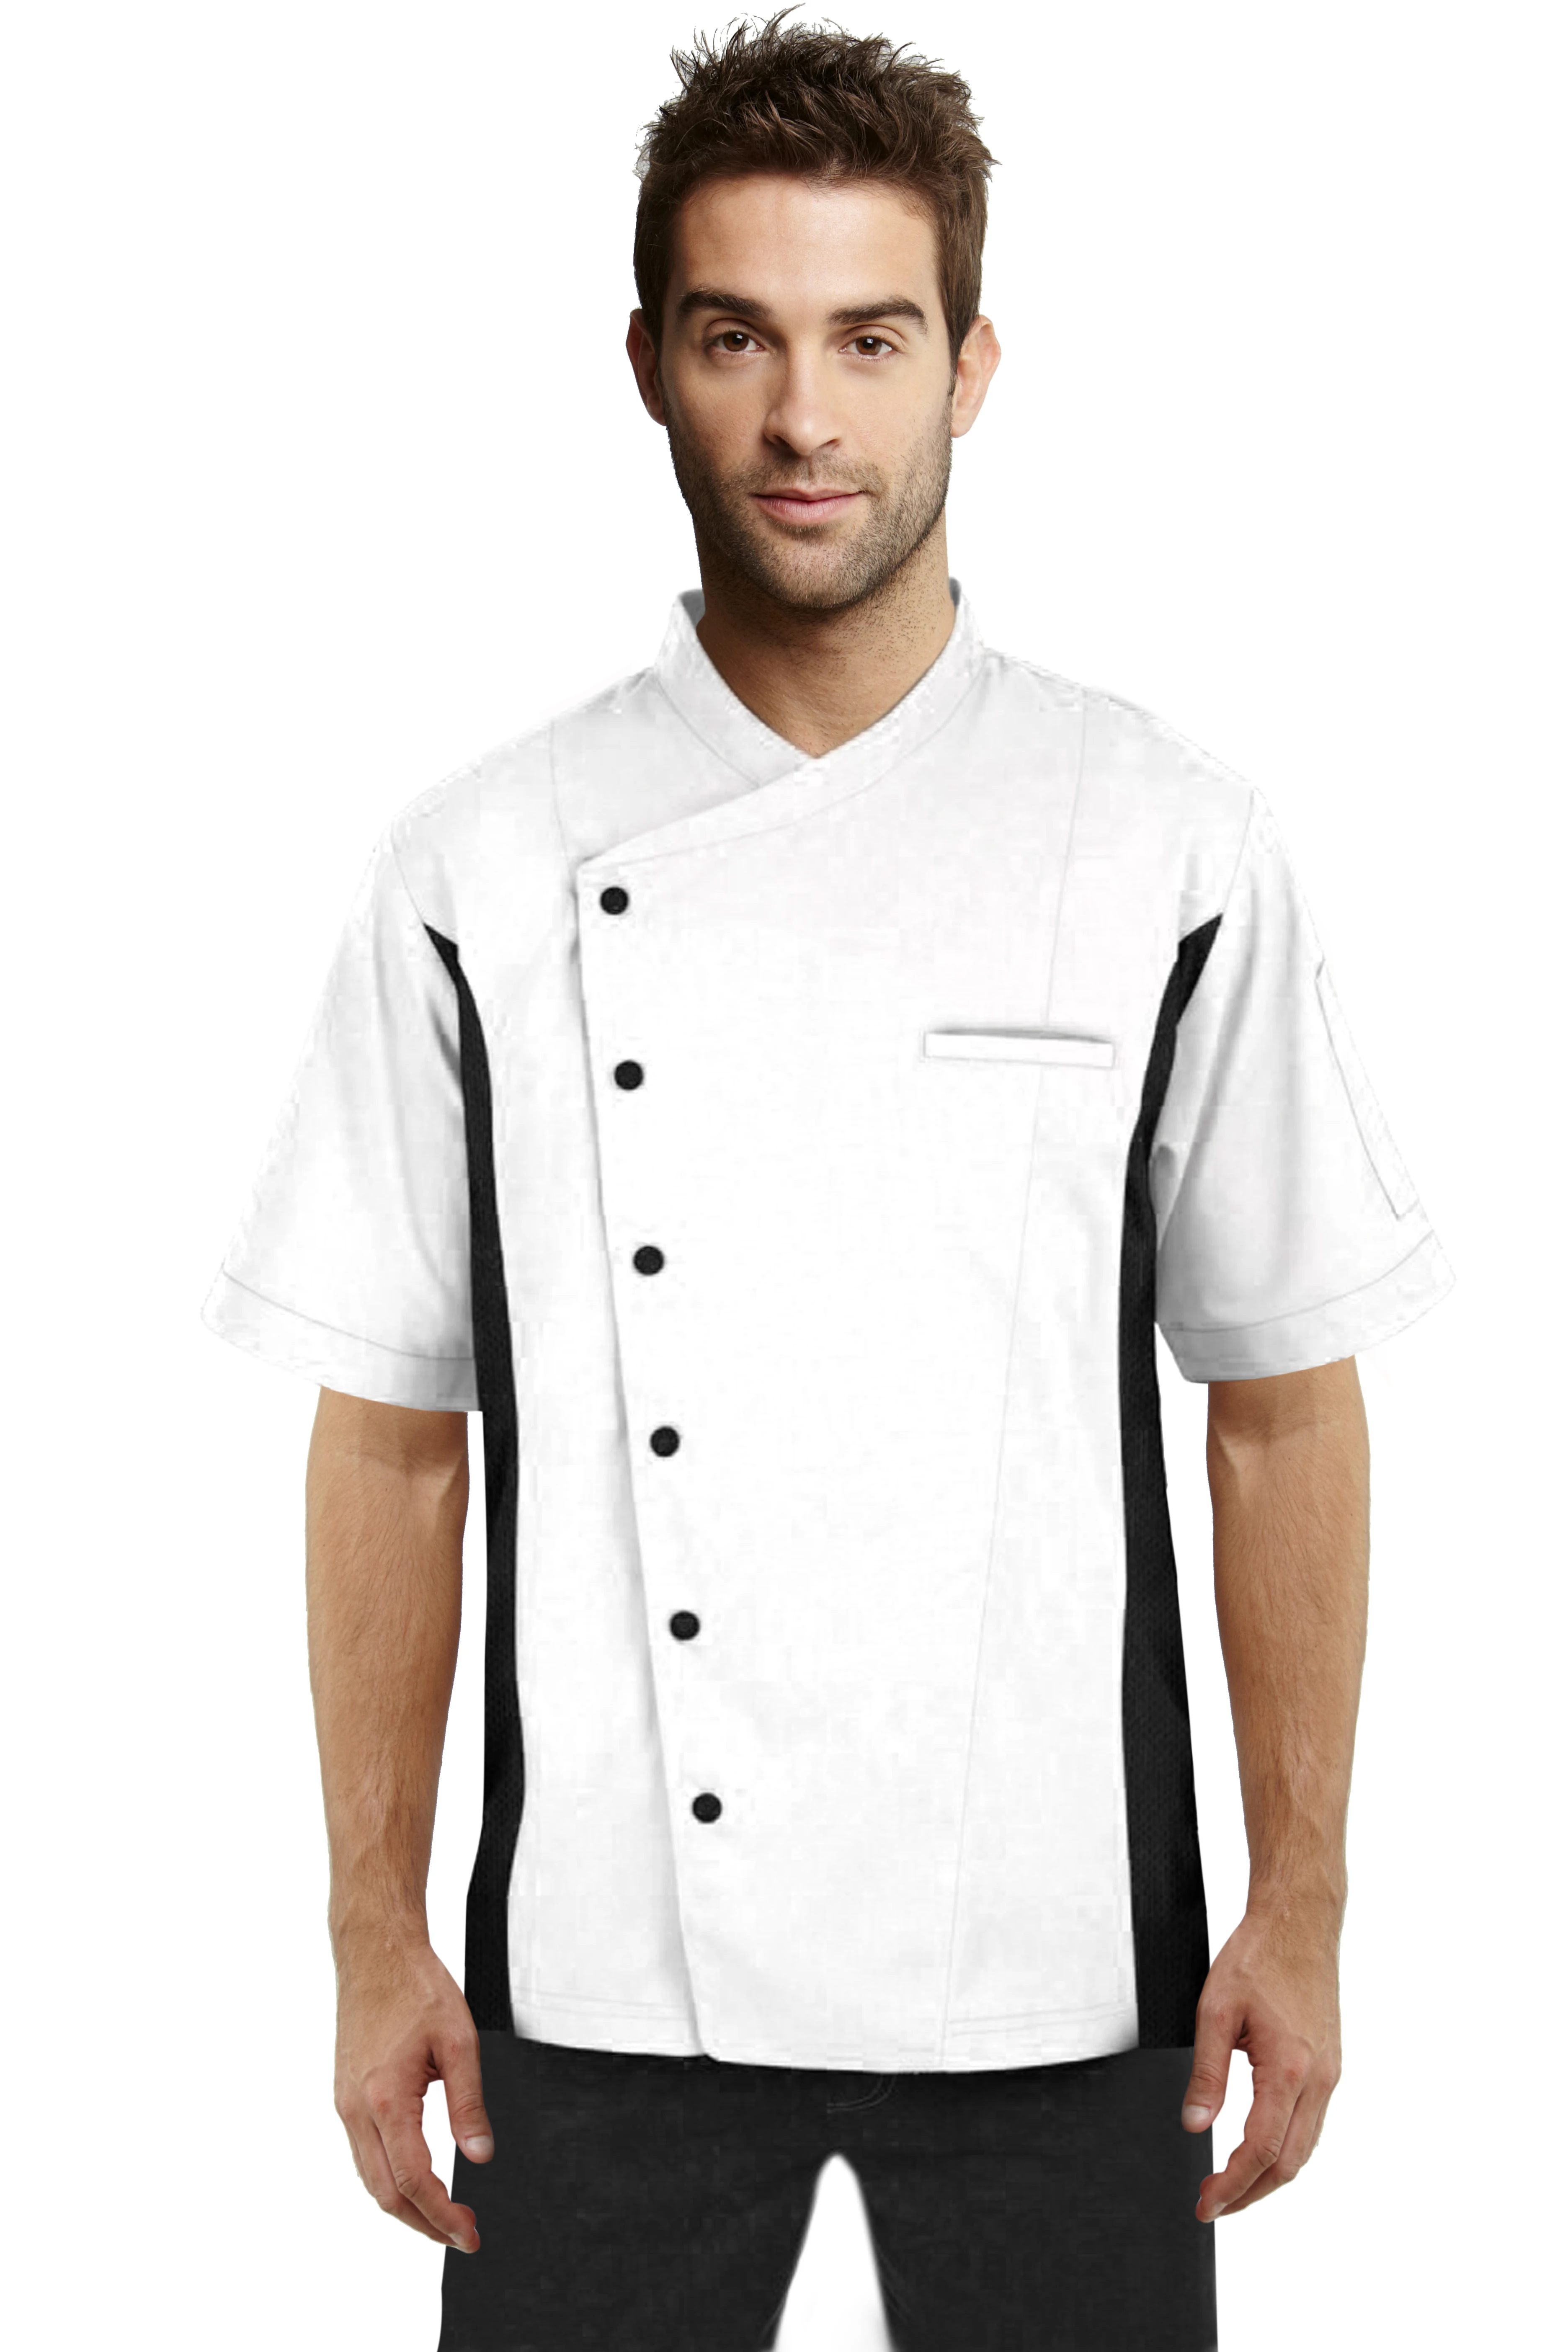 New Design Chef Uniform Kitchen Jacket unisex Black Factory hot sale custom chef jacket wear t shirt Best Quality with price